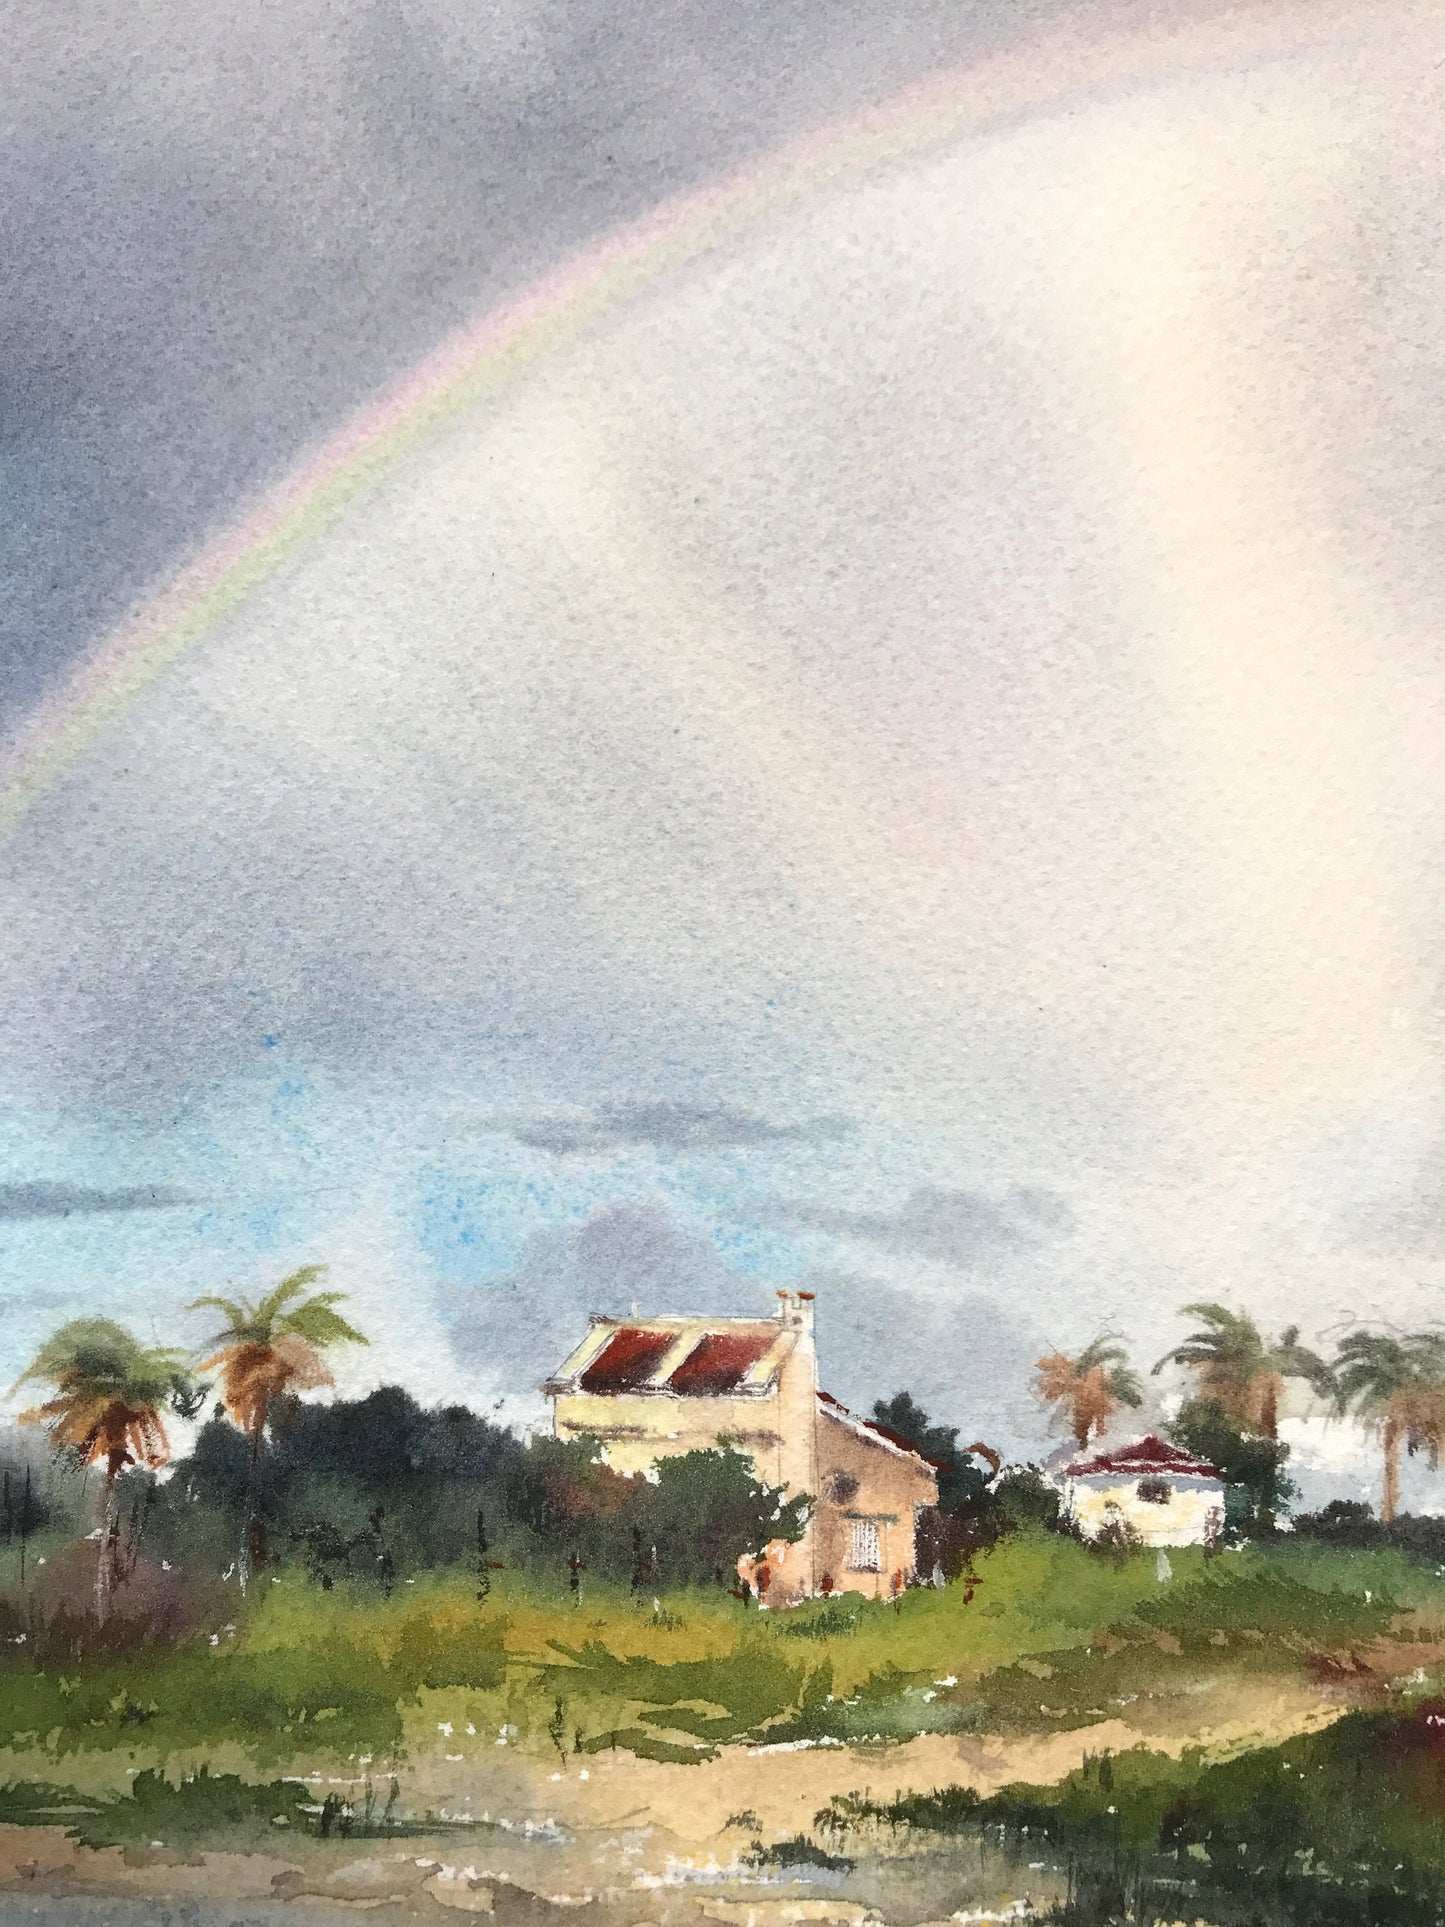 Beach House Painting Watercolor Original, Coastal Art, Sea Home Living Room Wall Decor, Gift, Rainbow, Cloud, Seaview